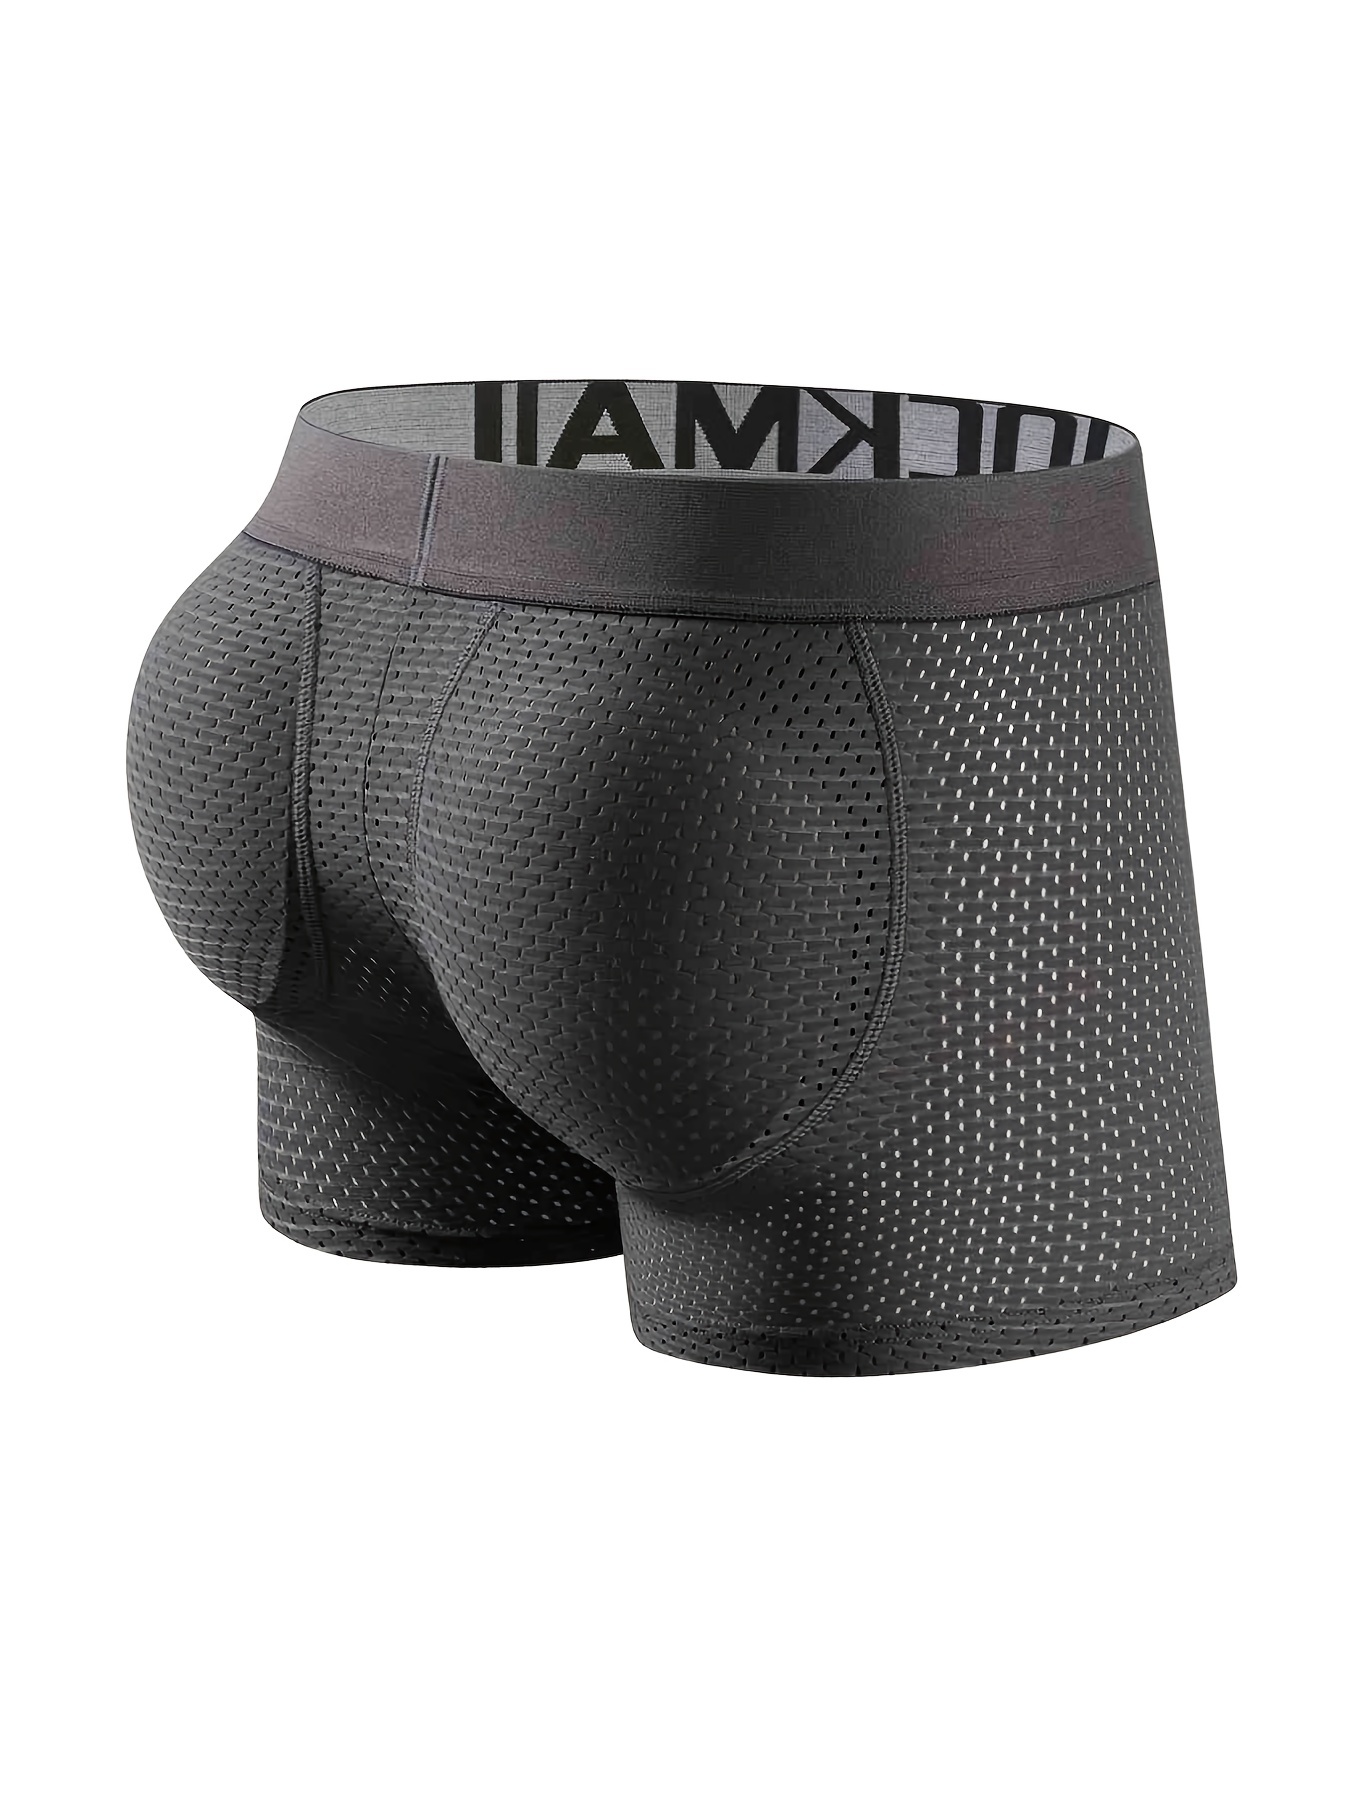 Underwear men's underwear mesh after empty breathable comfort pants  underpants bd16331